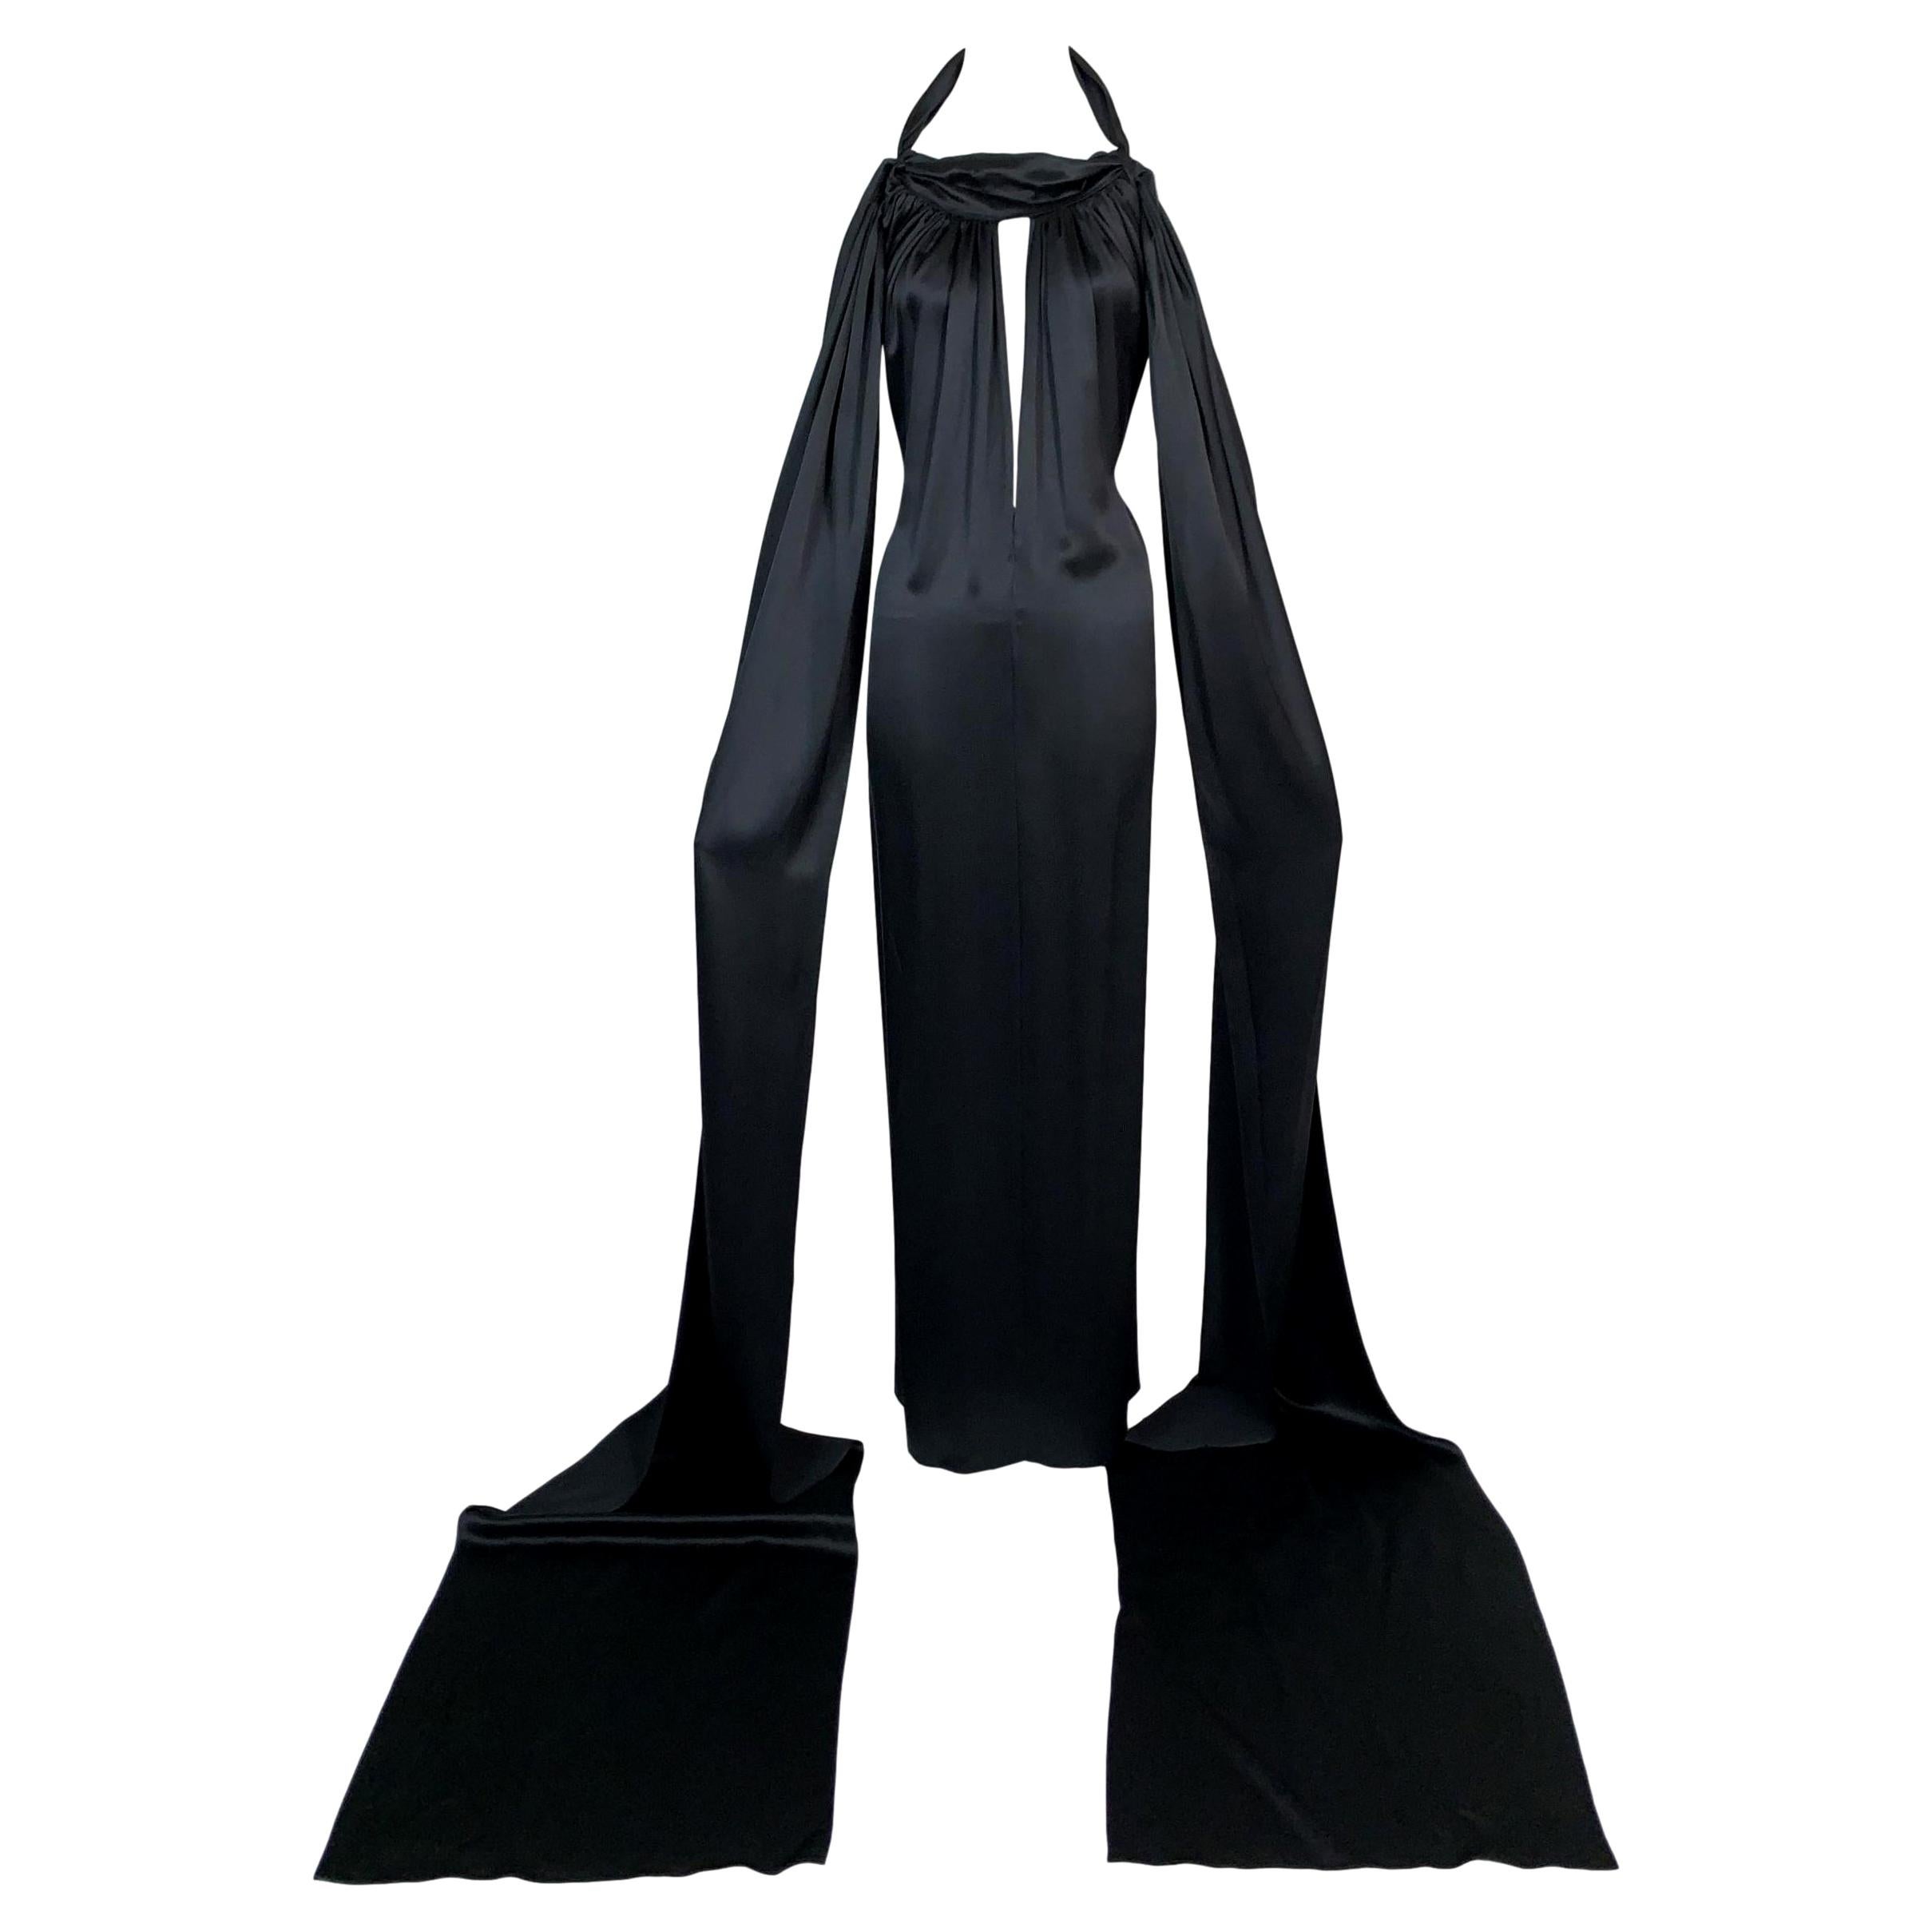 NWT 2001 Yves Saint Laurent Tom Ford Black Satin Plunging Column Gown Dress